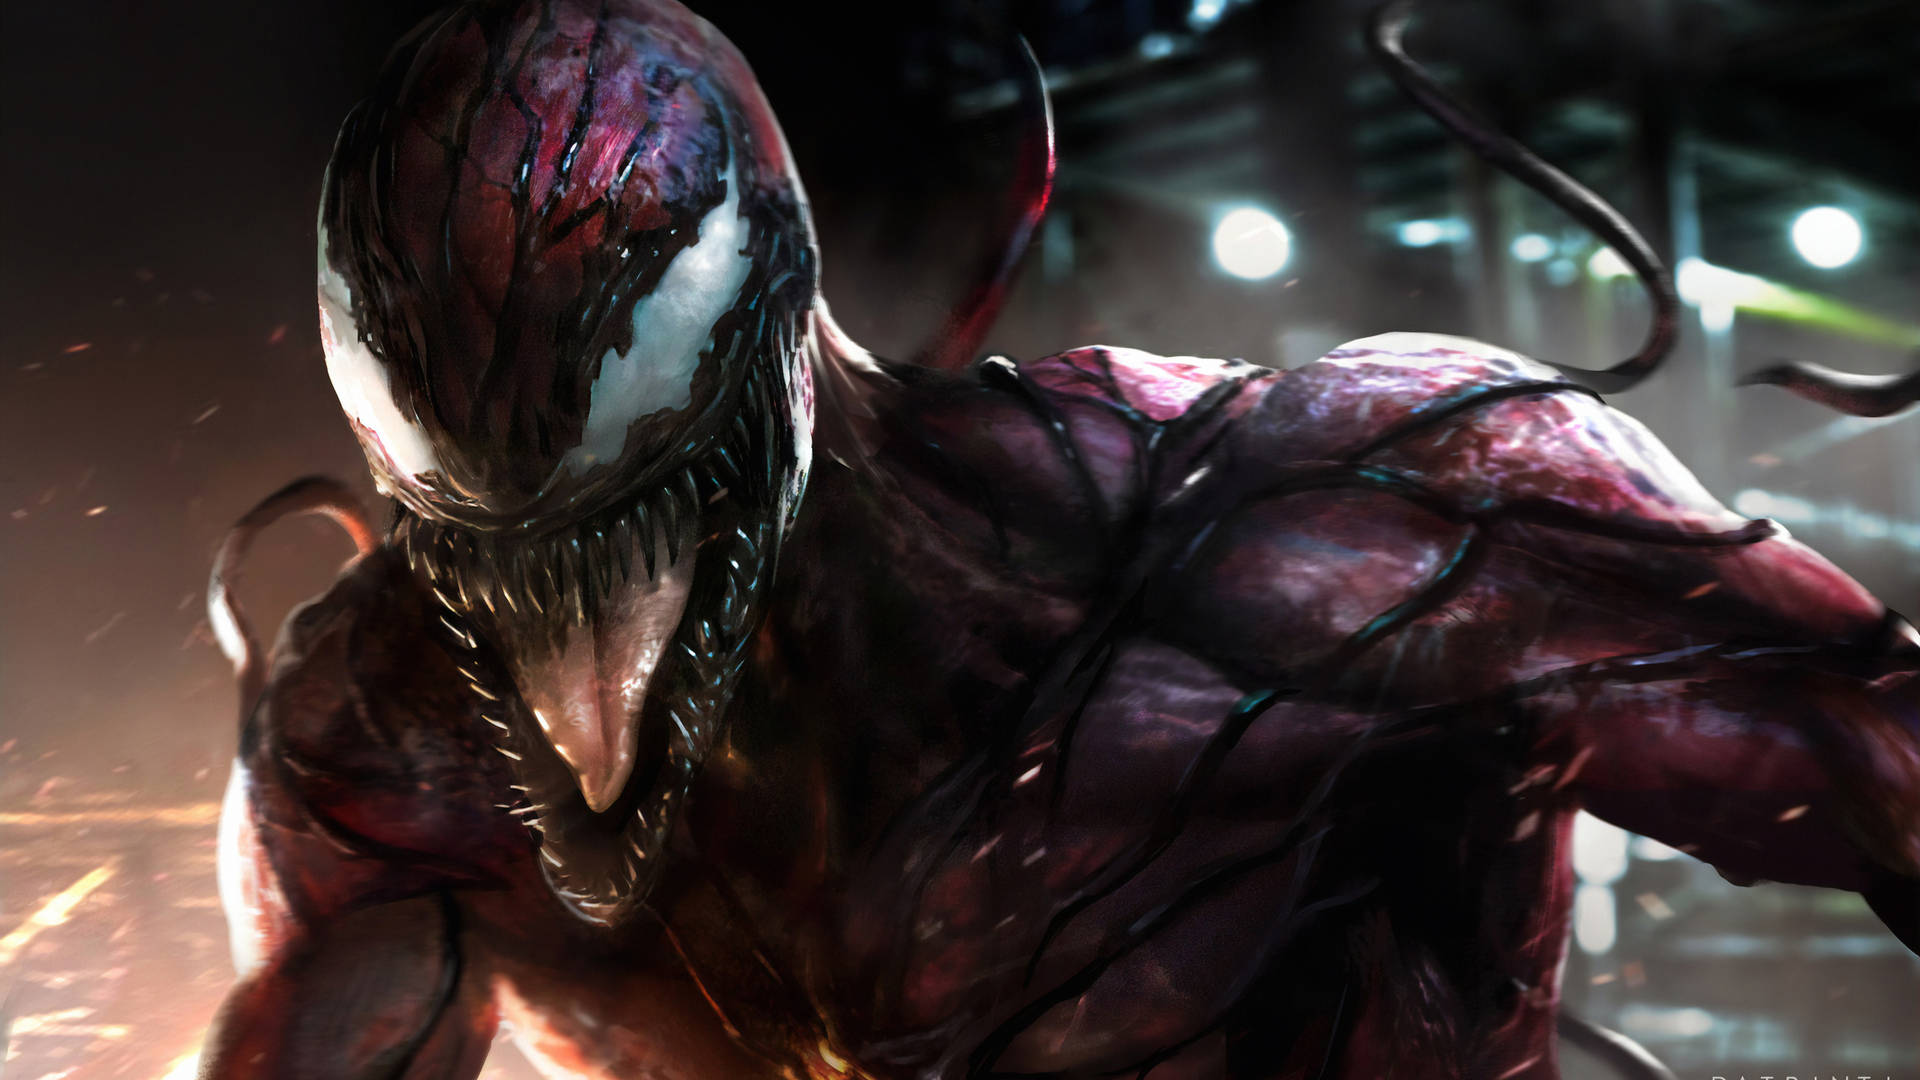 Carnage Of Venom Movie Wallpaper